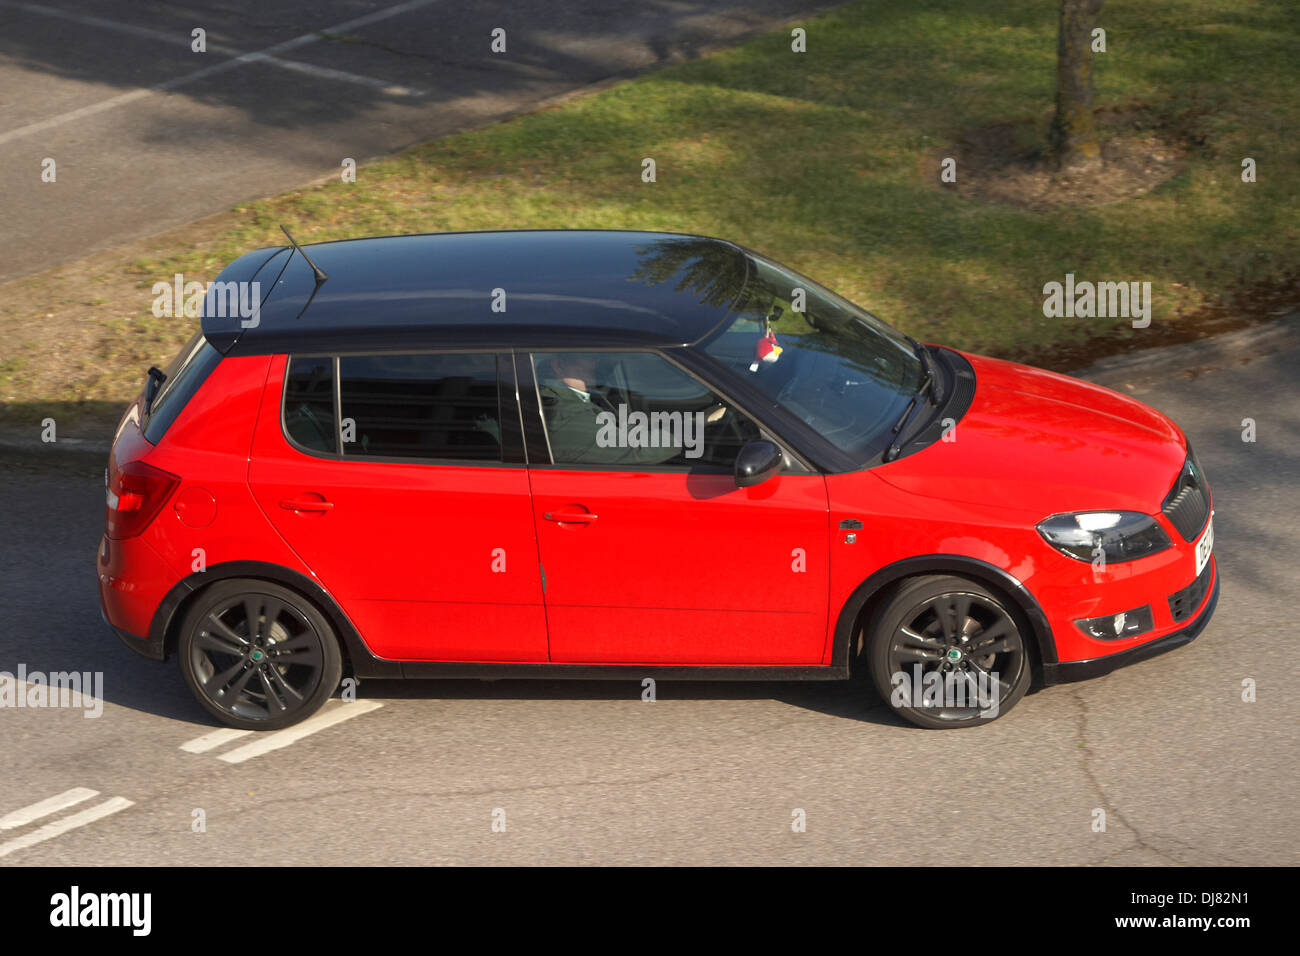 Red skoda Fabia vrs supermini car with black roof Stock Photo - Alamy